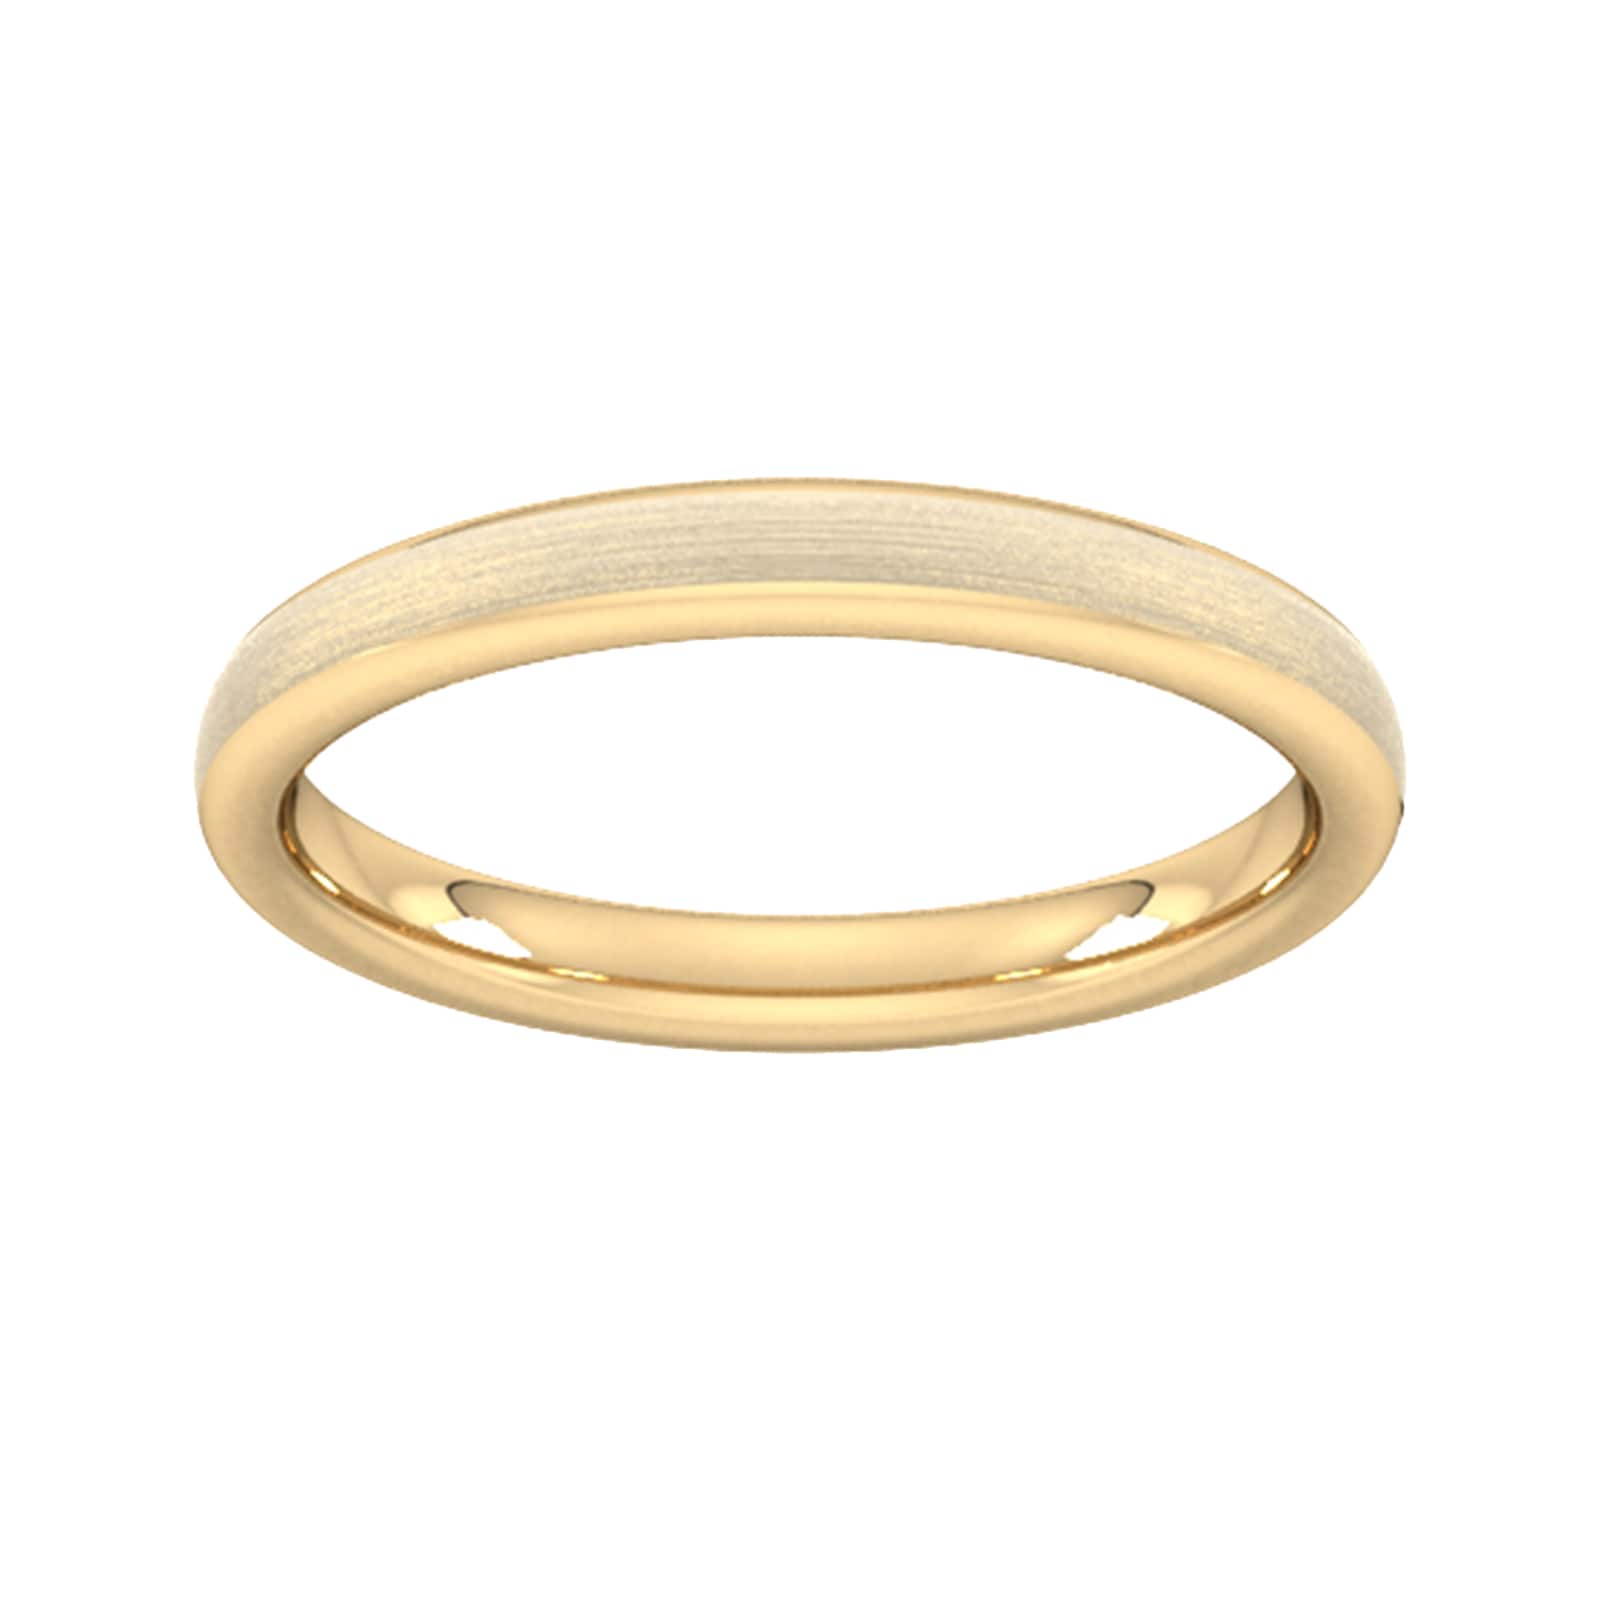 2.5mm Slight Court Standard Matt Finished Wedding Ring In 18 Carat Yellow Gold - Ring Size K